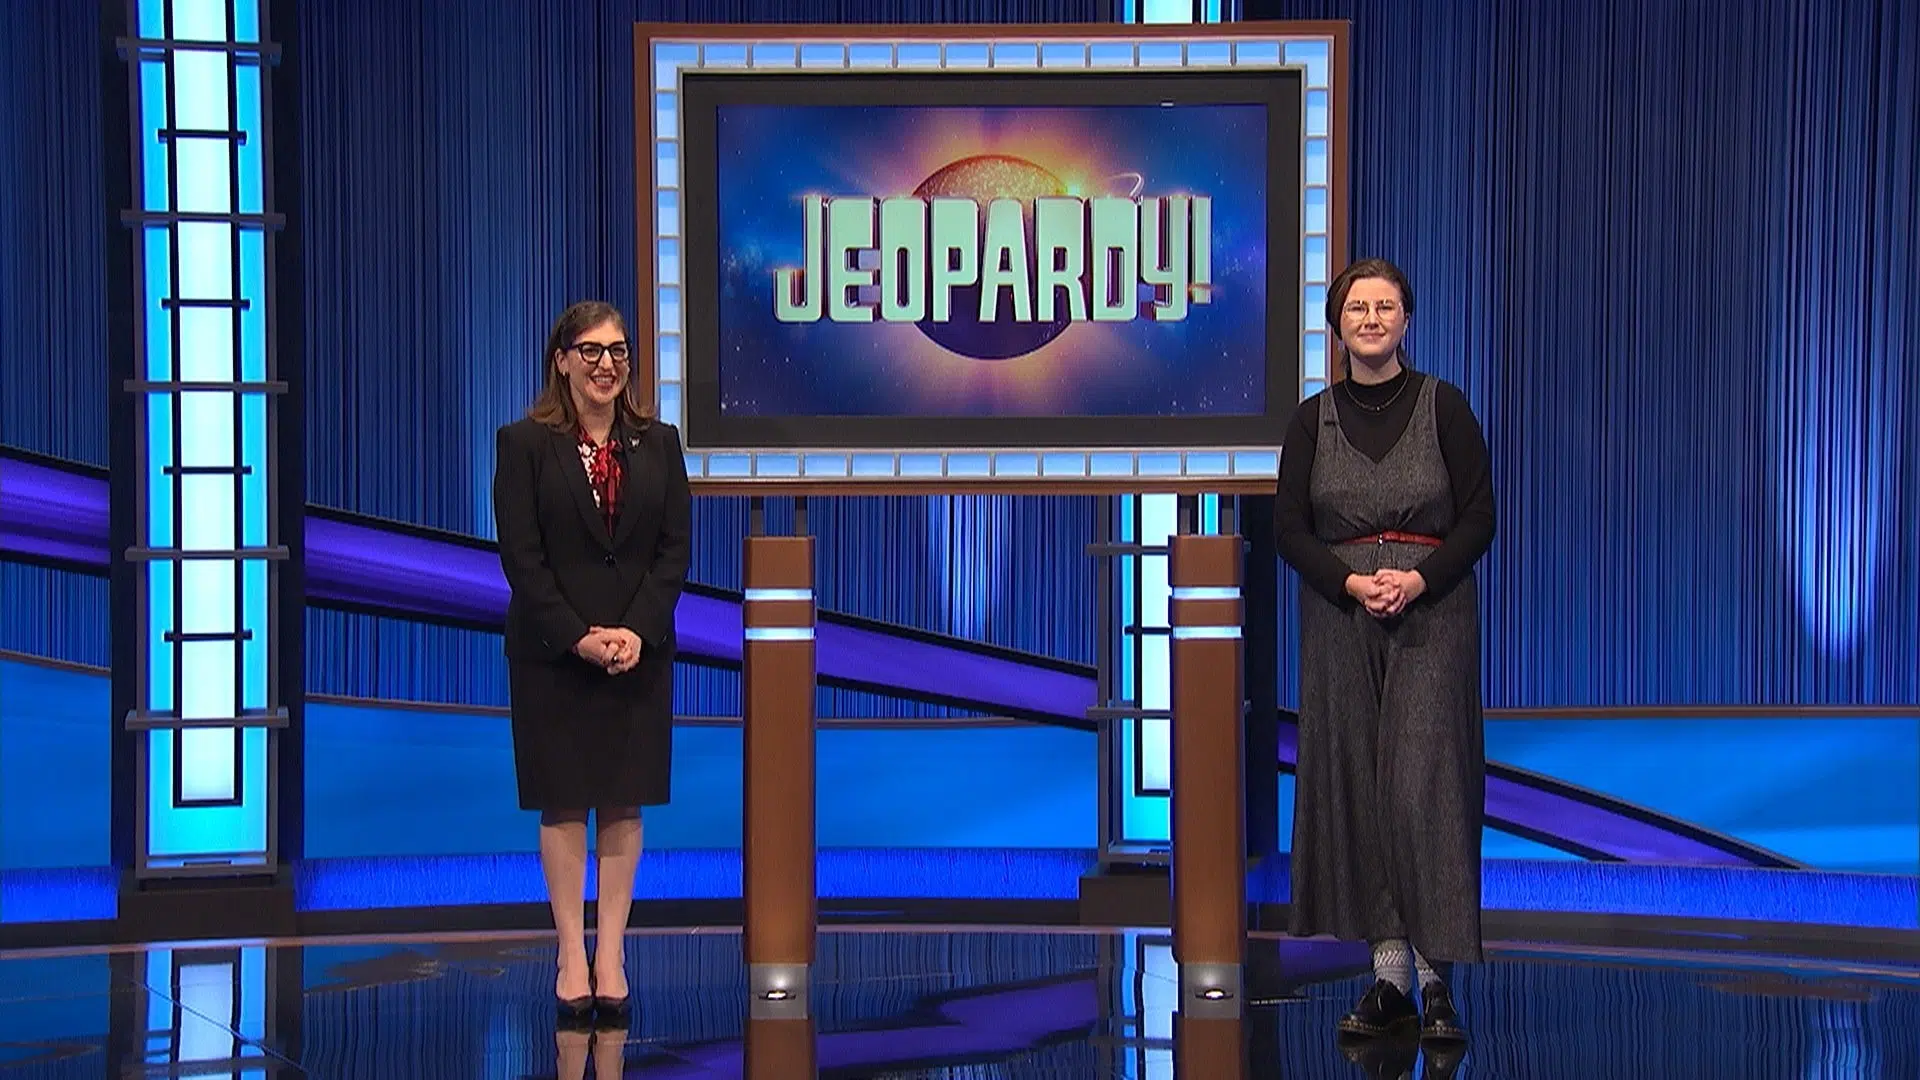 Nova Scotia woman wins big on Jeopardy